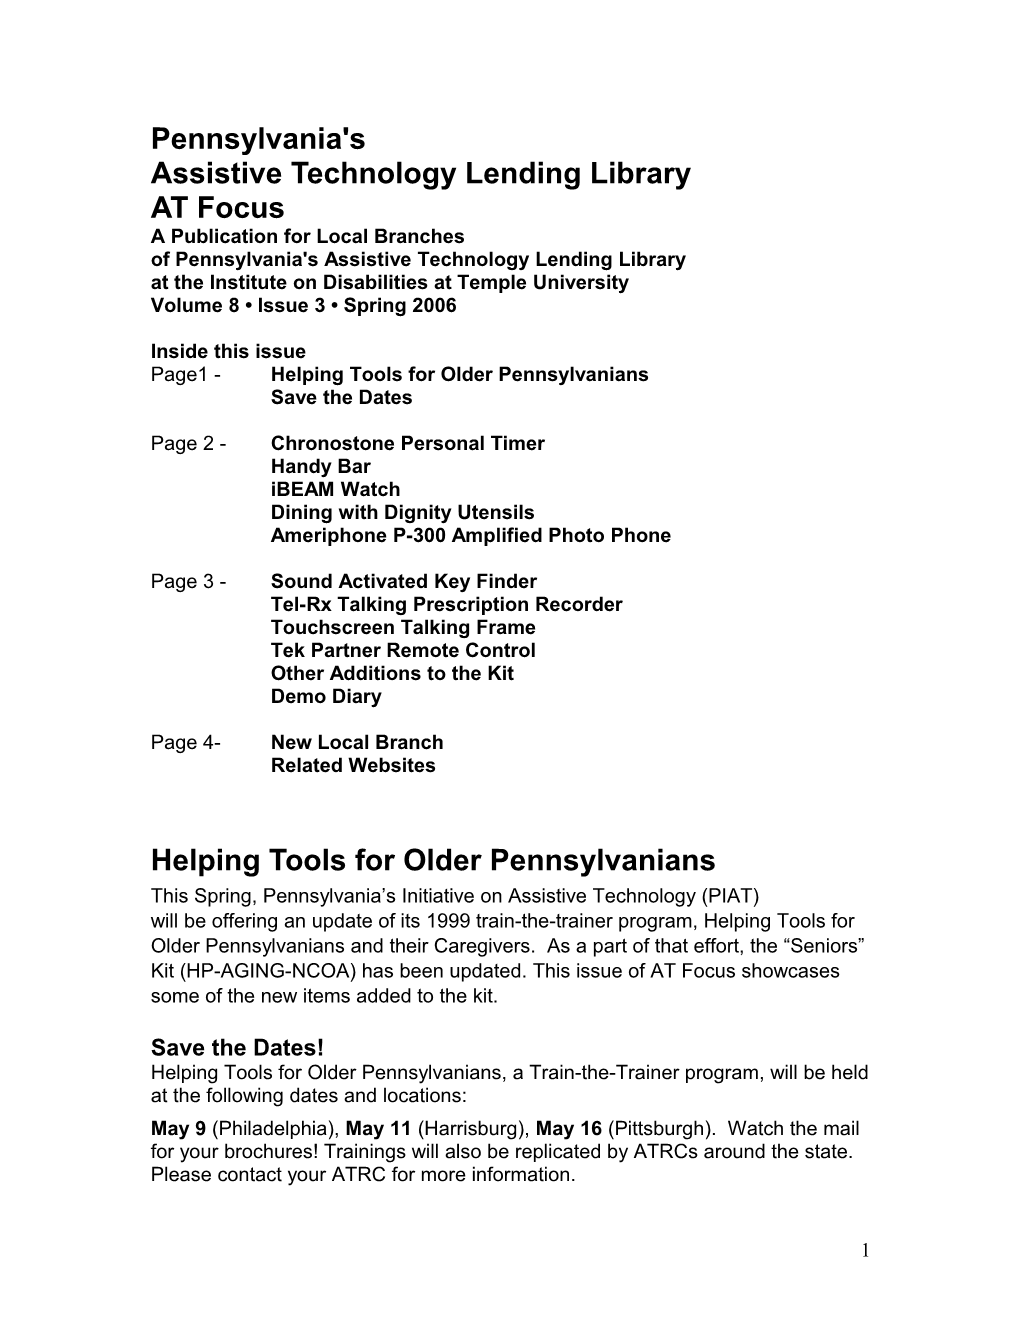 Pennsylvania's Assistive Technology Lending Library